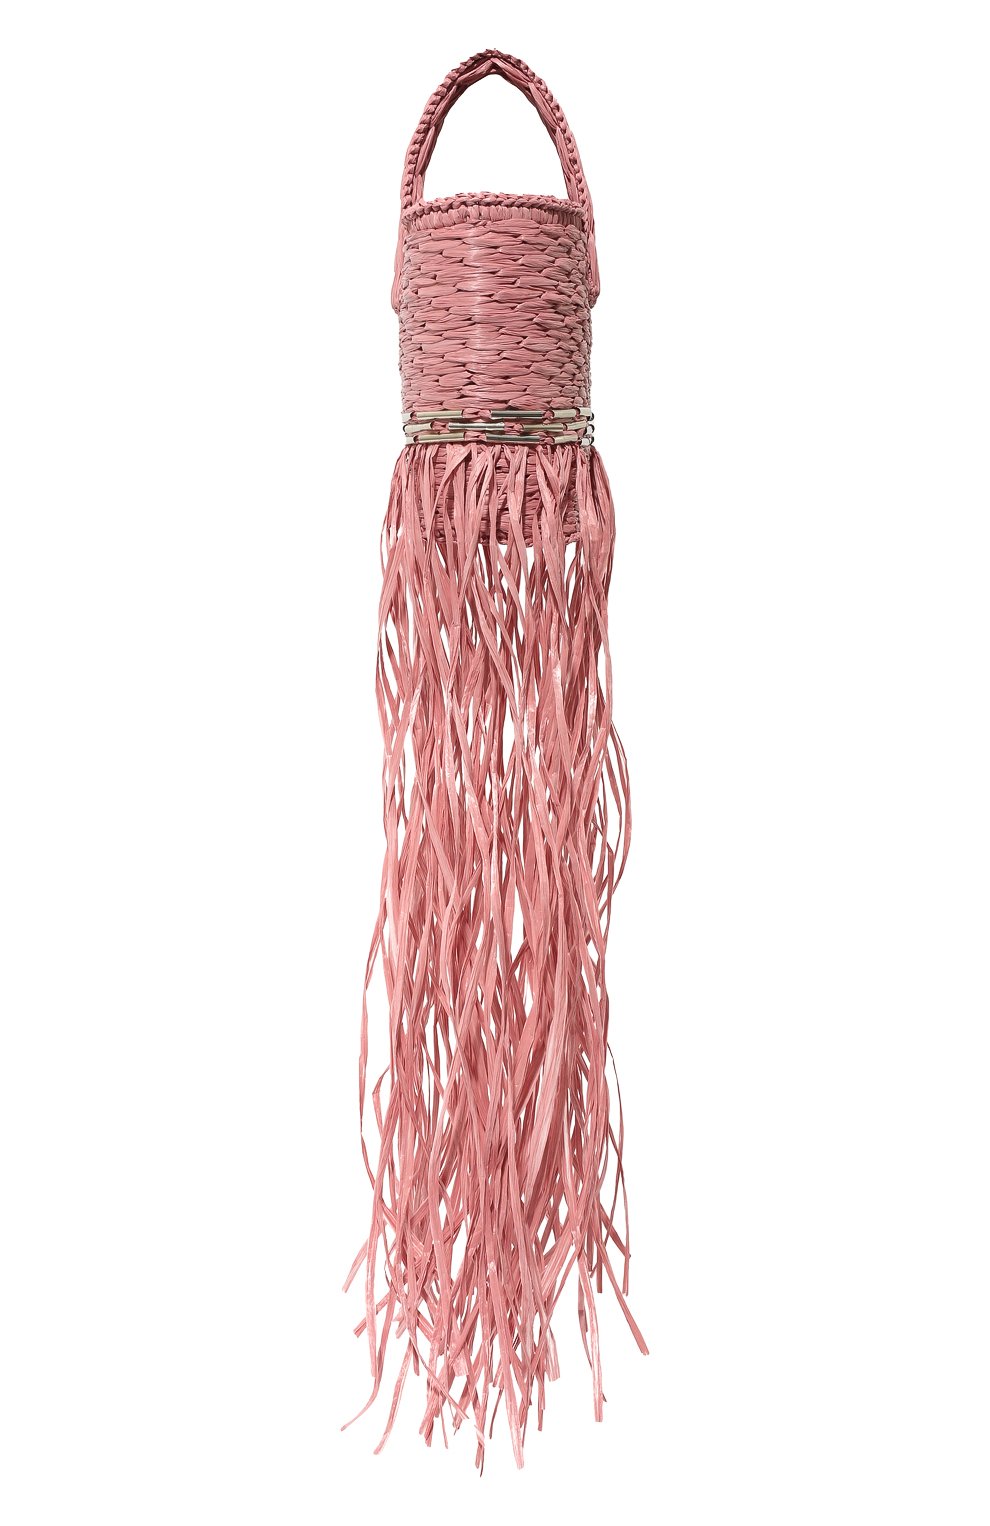 Женская сумка-корзинка SEYANA светло-розового цвета, арт. СУМКА01 | Фото 4 (Сумки-технич еские: Сумки top-handle; Материал: Растительное волокно; Ремень/цепочка: На ремешке; Размер: small)